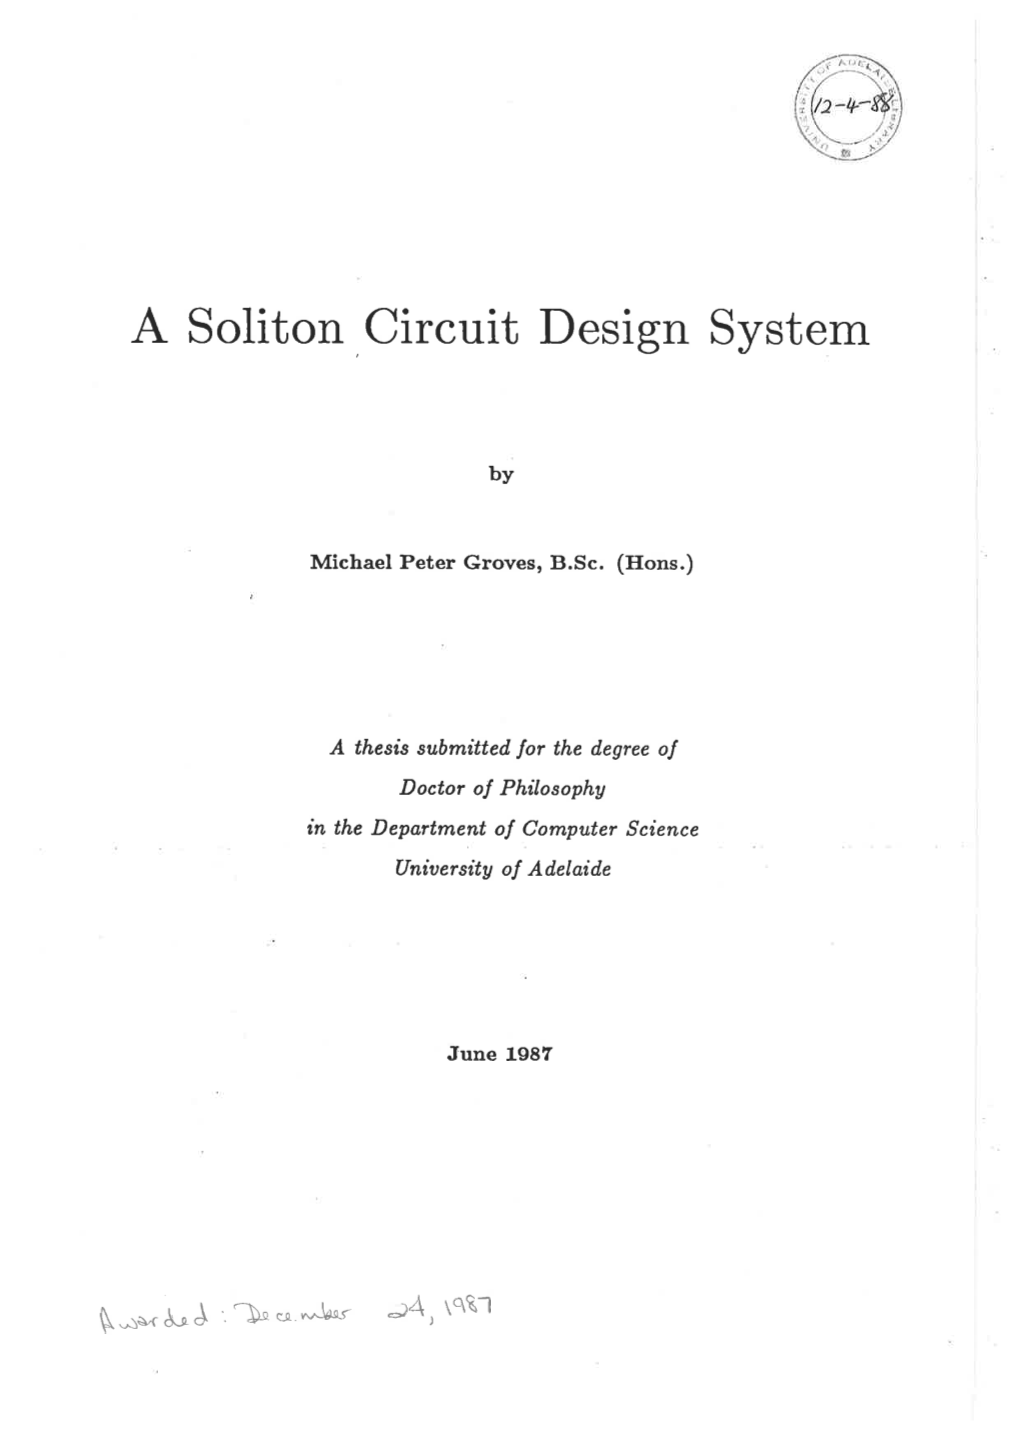 A Soliton Circuit Design System